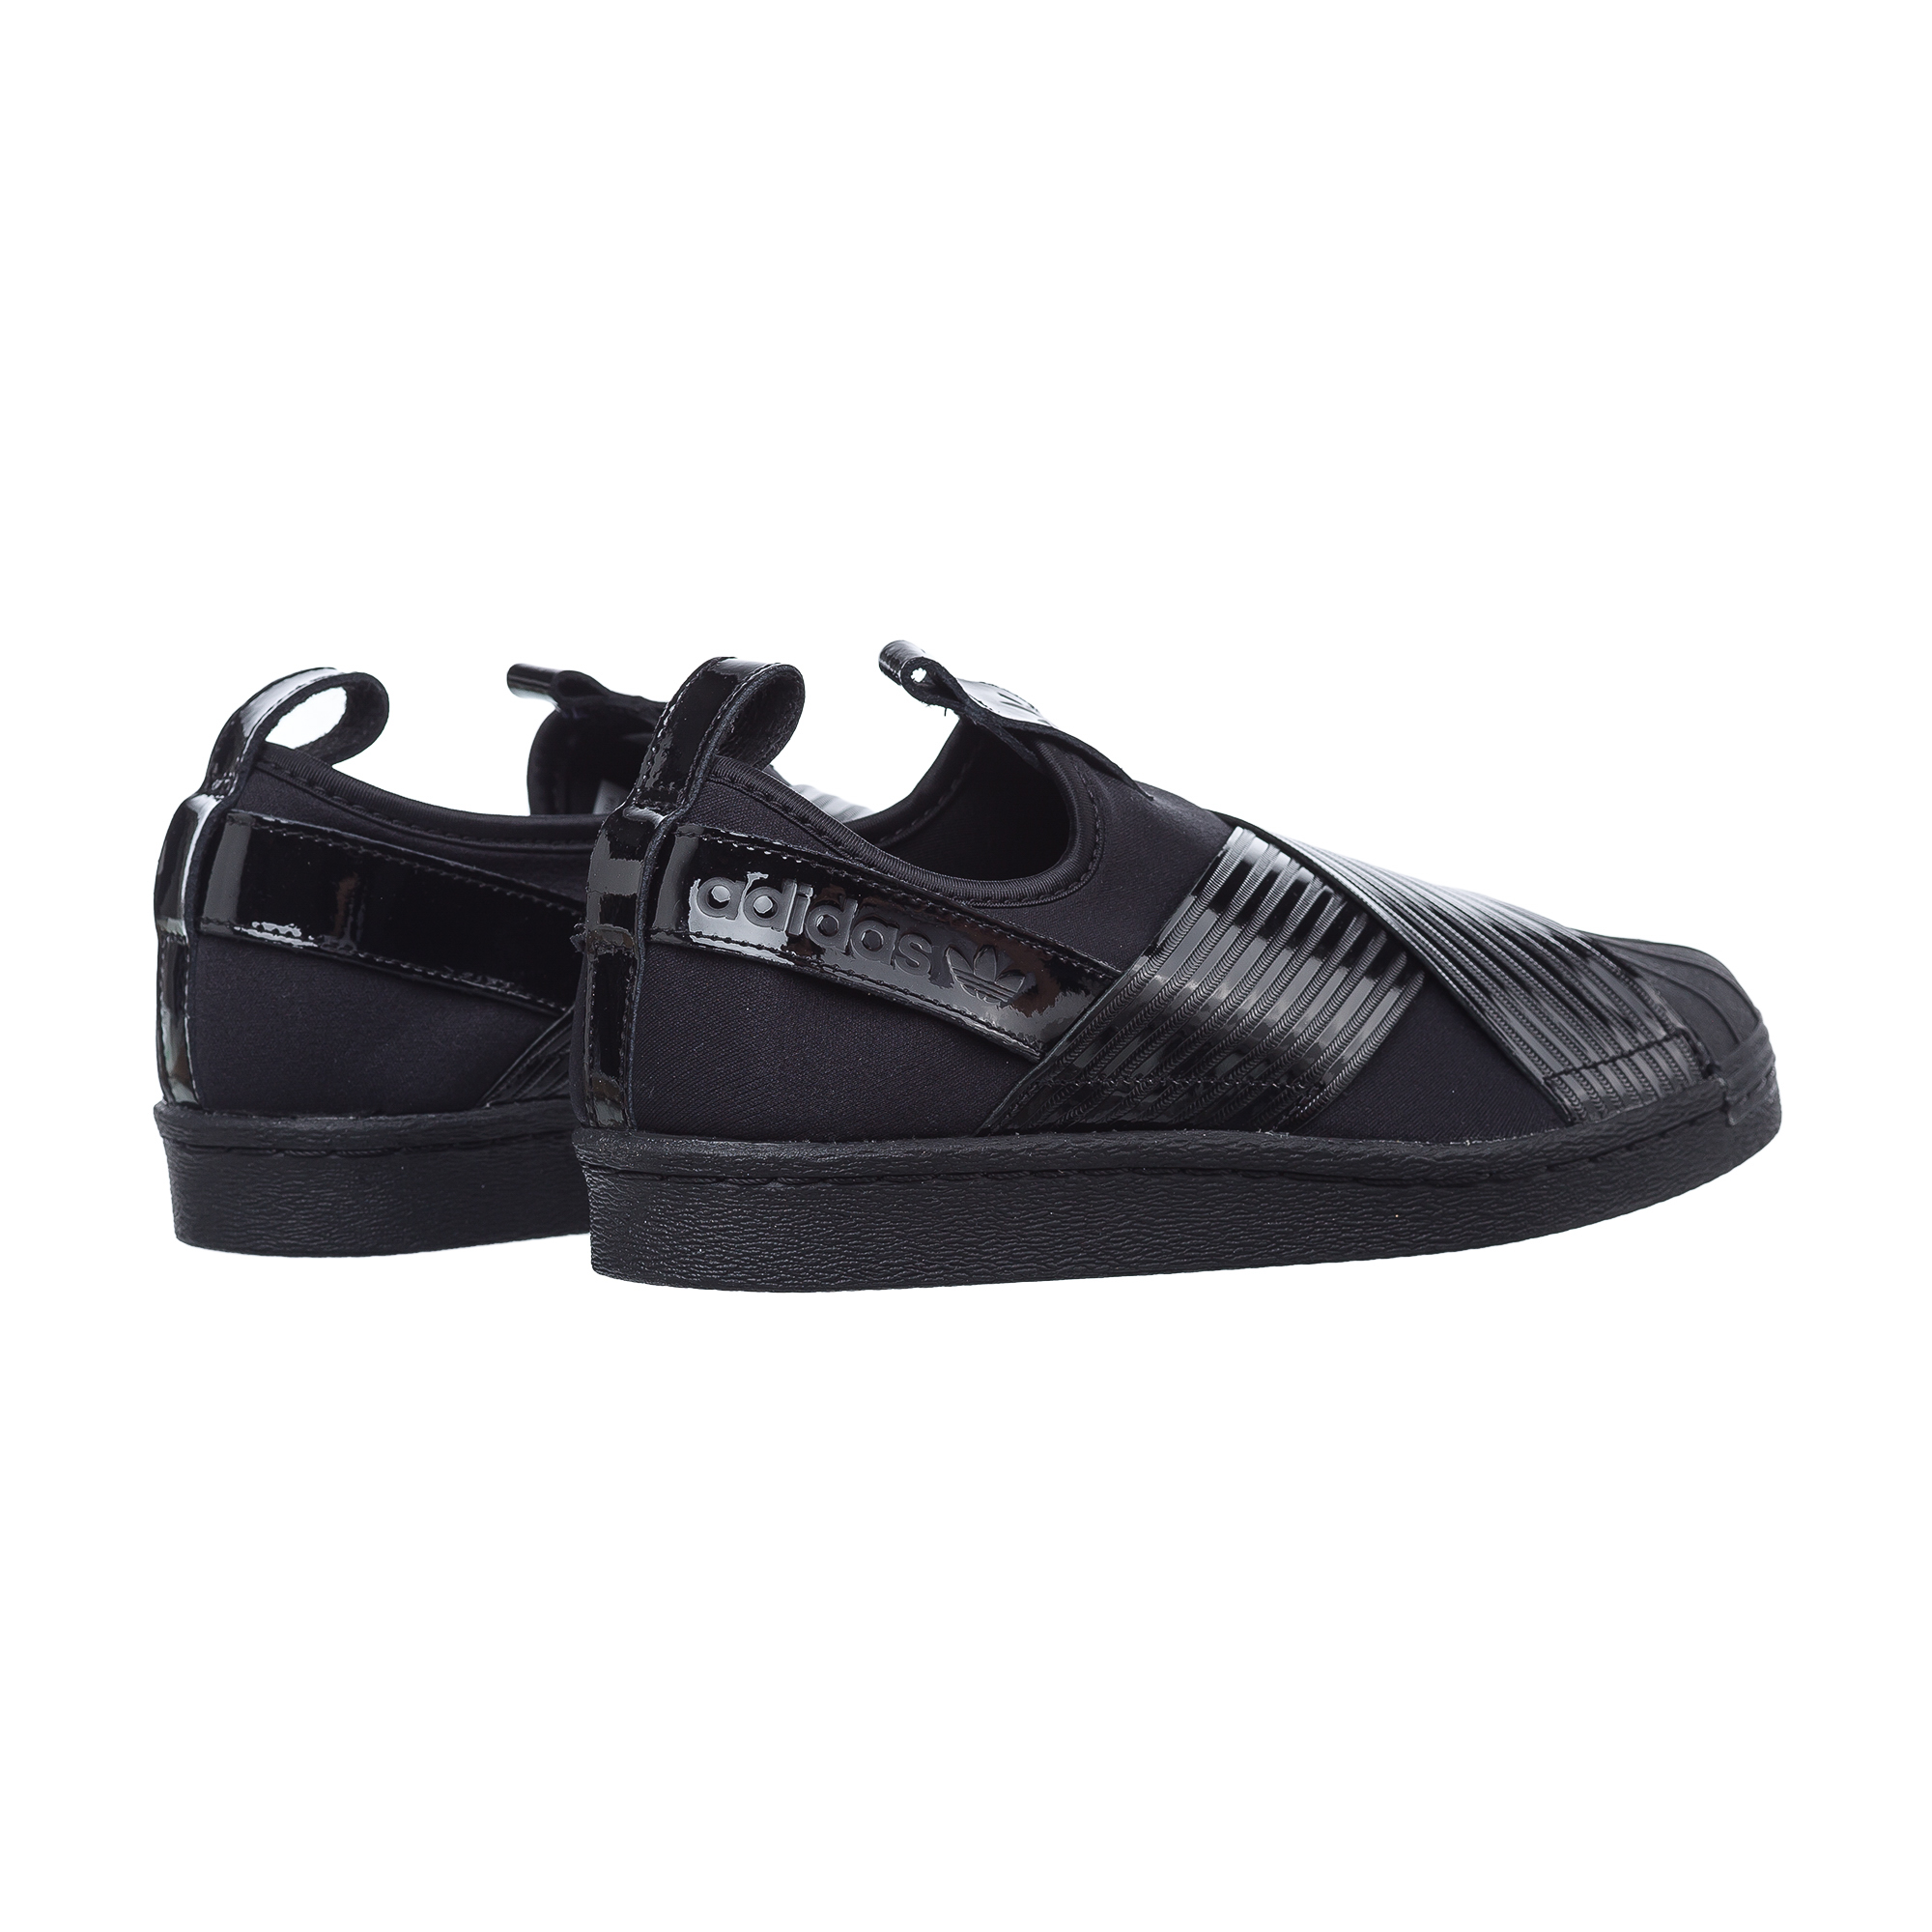 Superstar Slip On Adidas, размер 37, цвет черный ADBD8055 - фото 3